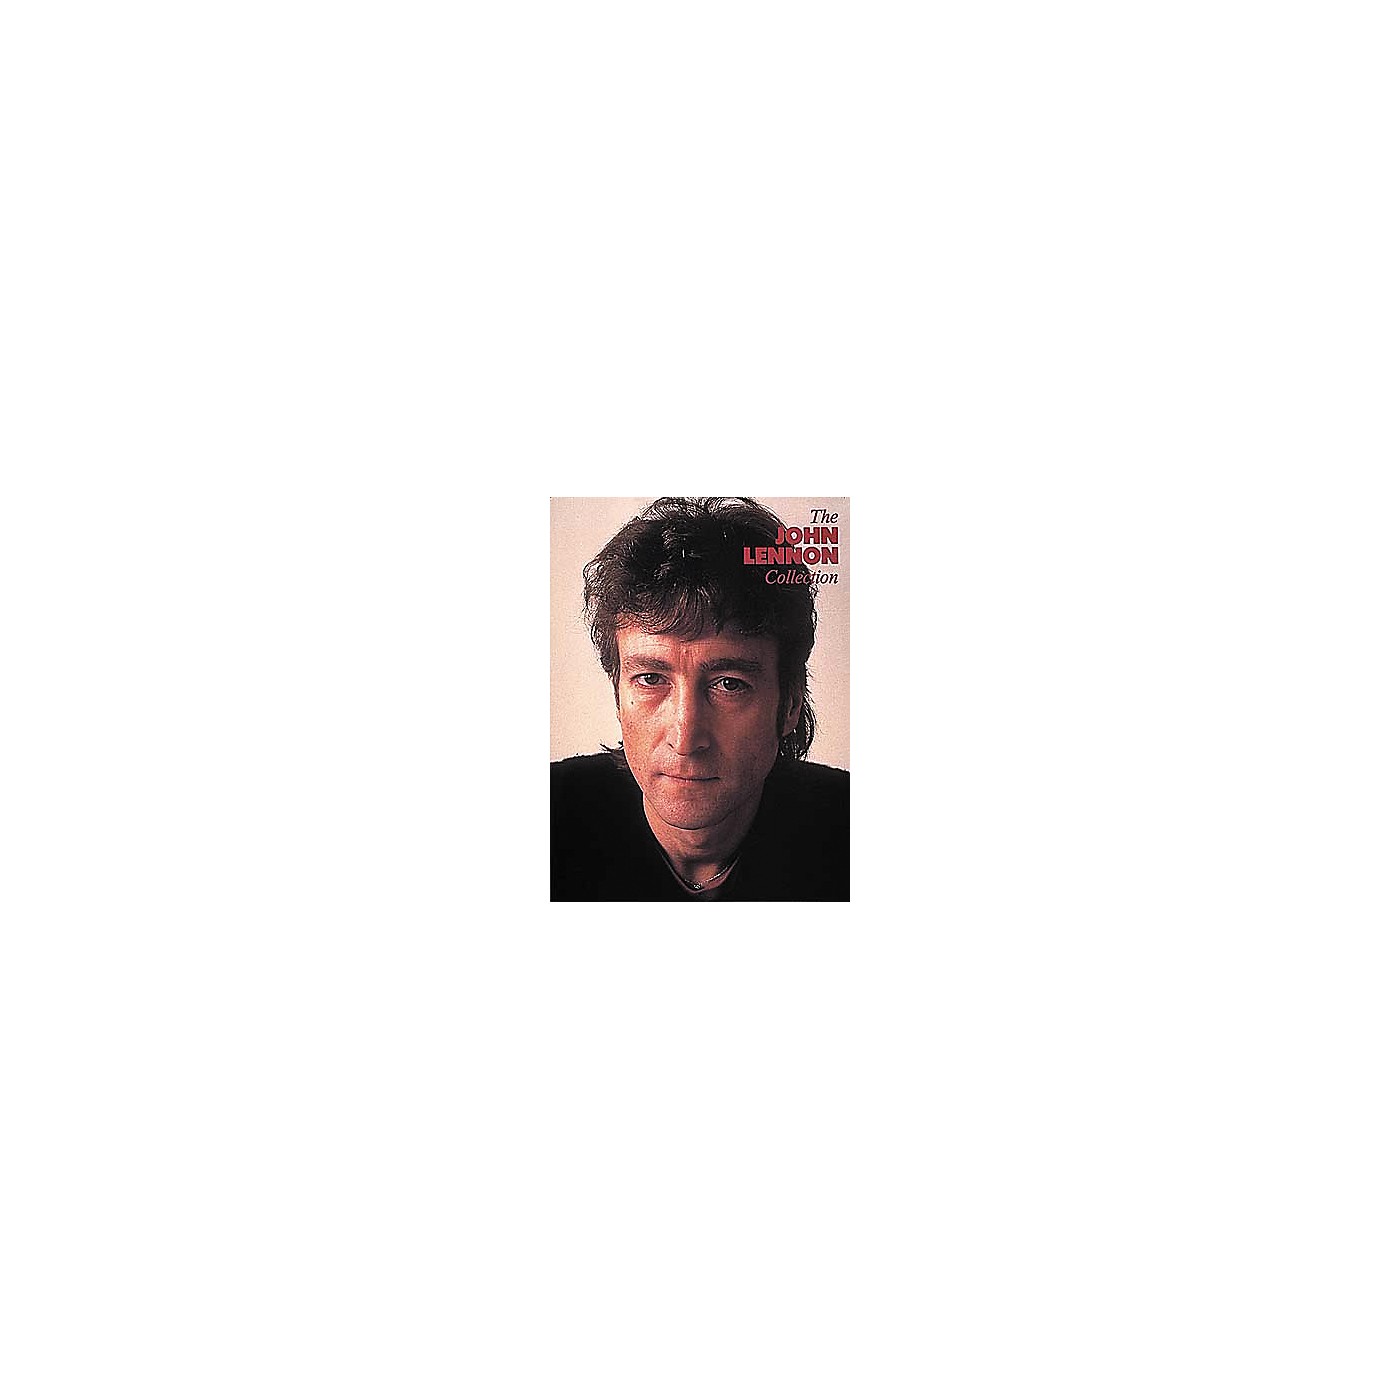 Hal Leonard The John Lennon Collection Piano/Vocal/Guitar Artist Songbook thumbnail